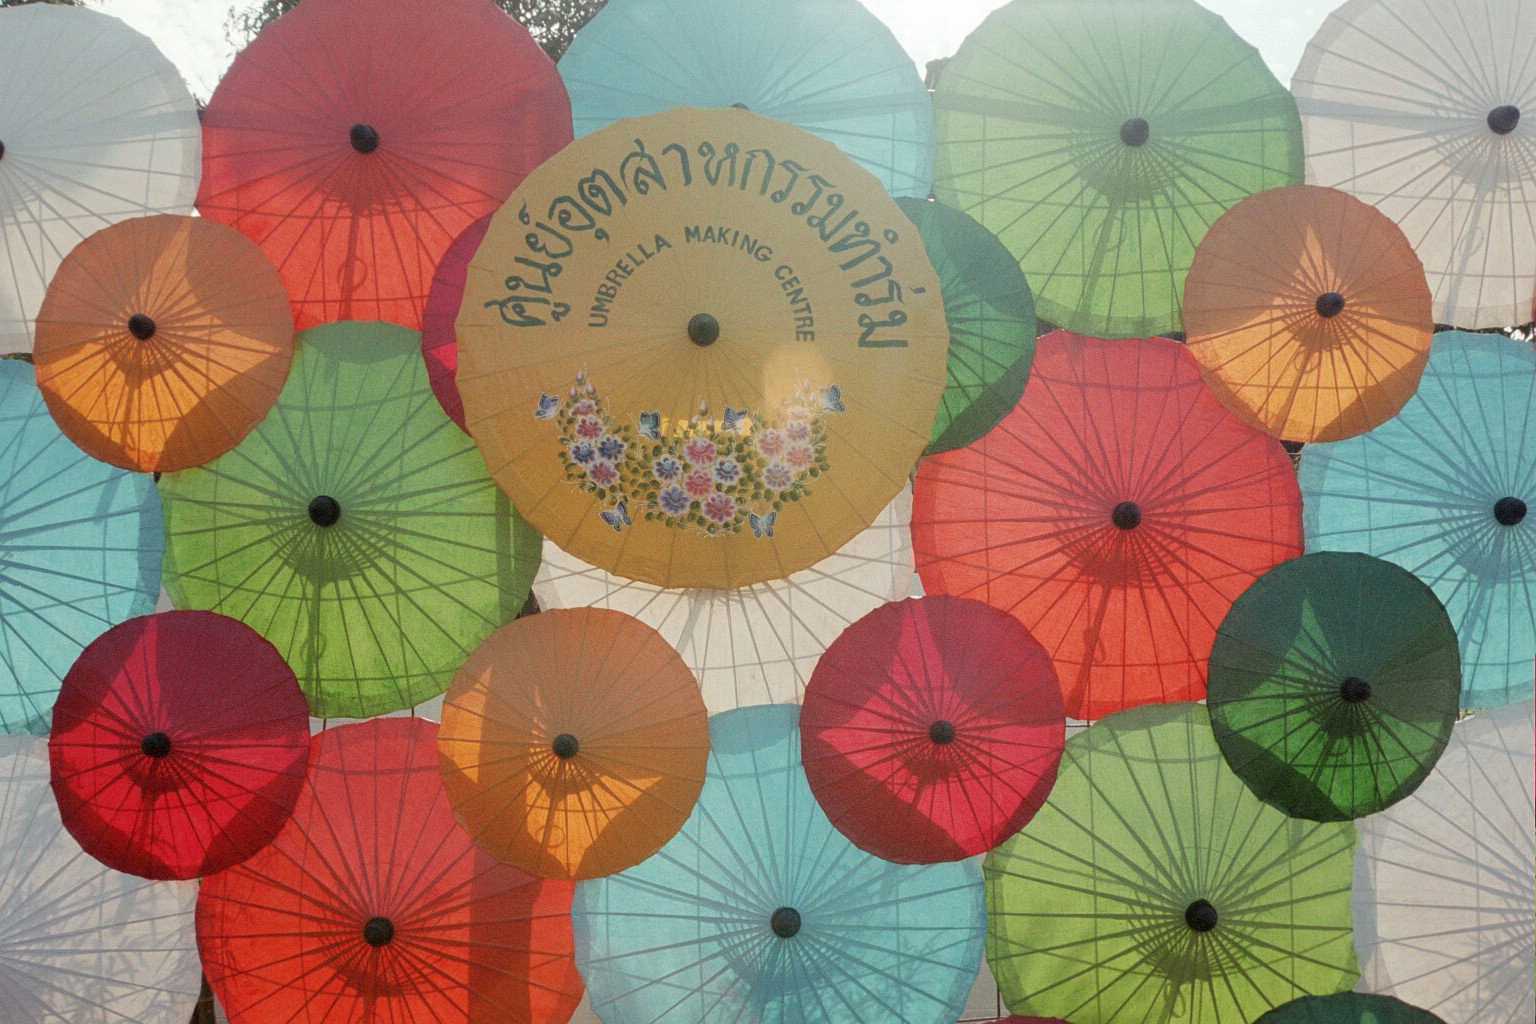 Umbrella factory Chang Mai Thailand - Mar 2003